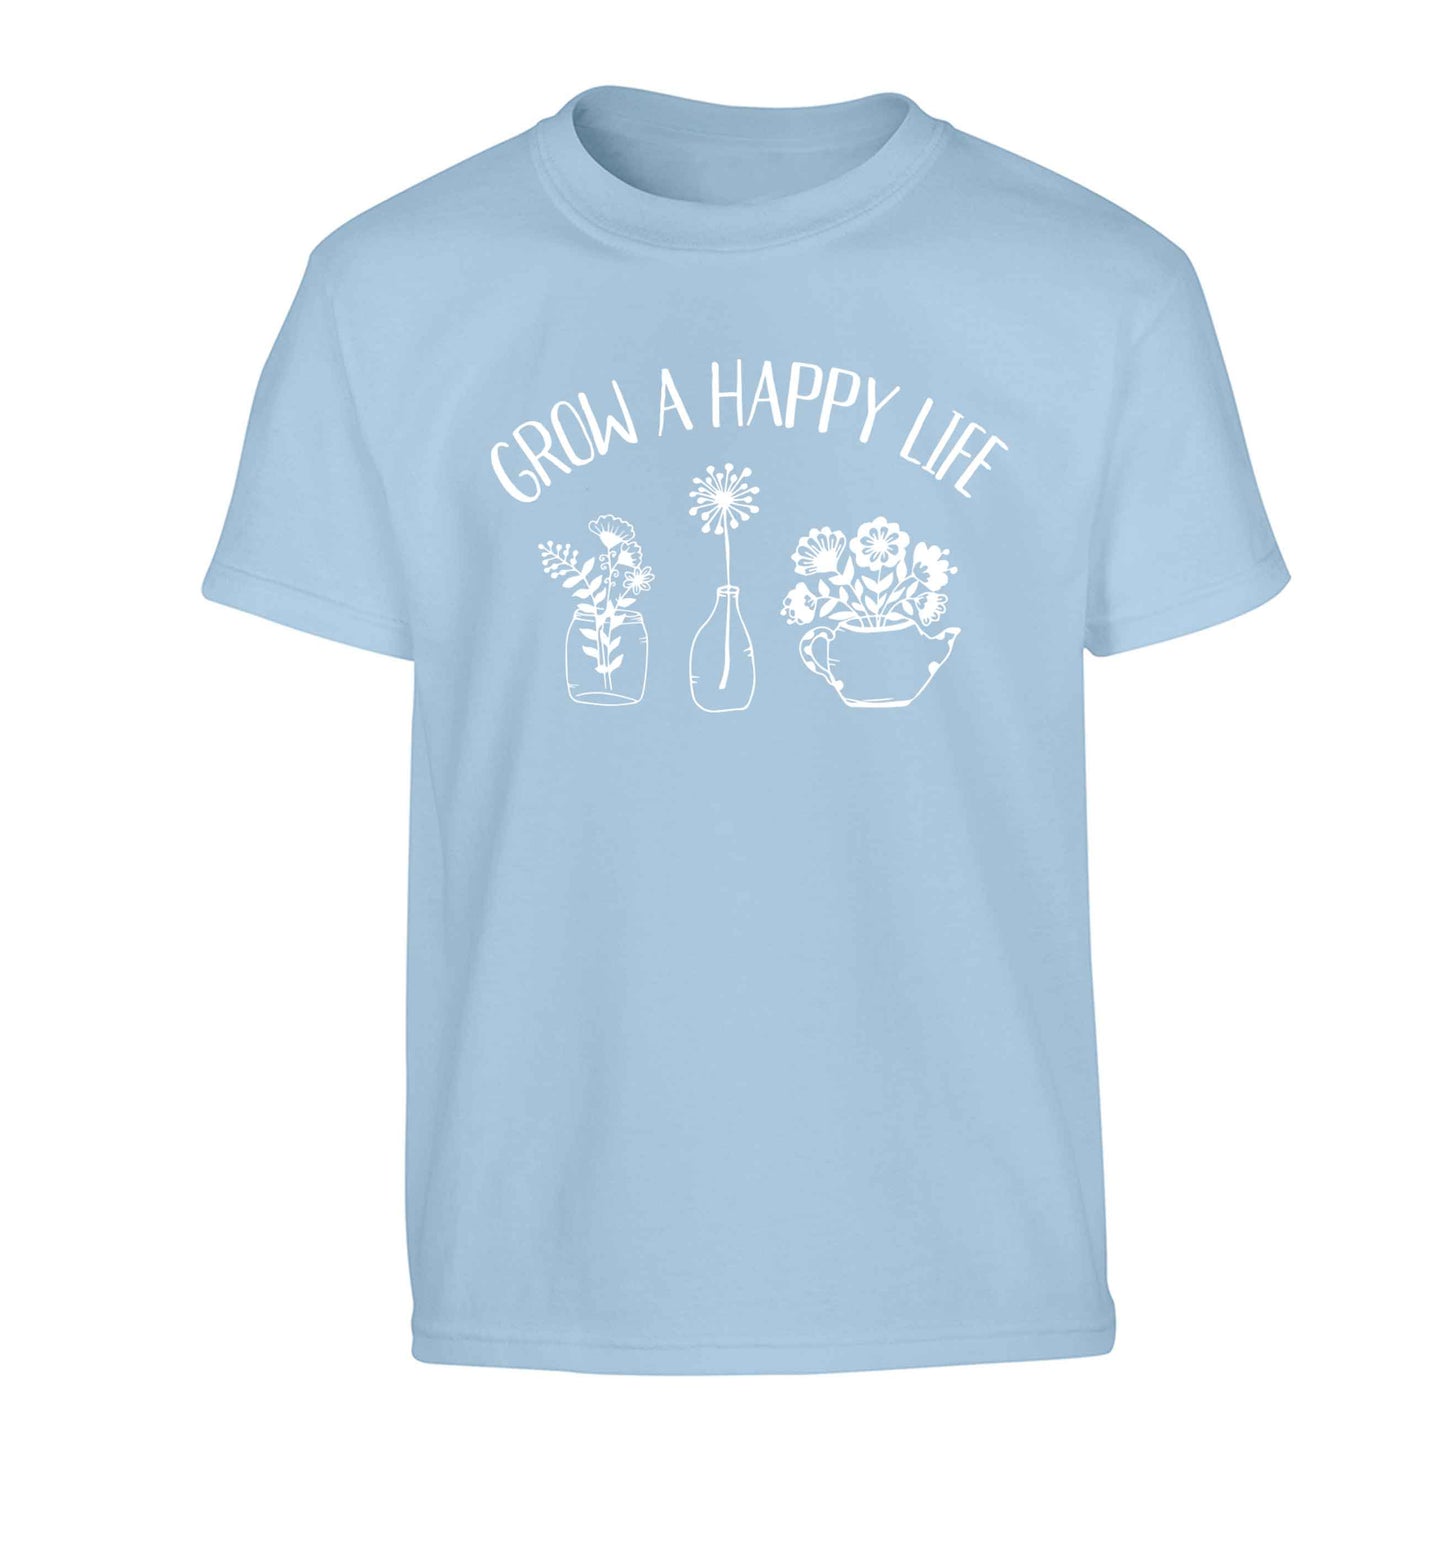 Grow a happy life Children's light blue Tshirt 12-13 Years